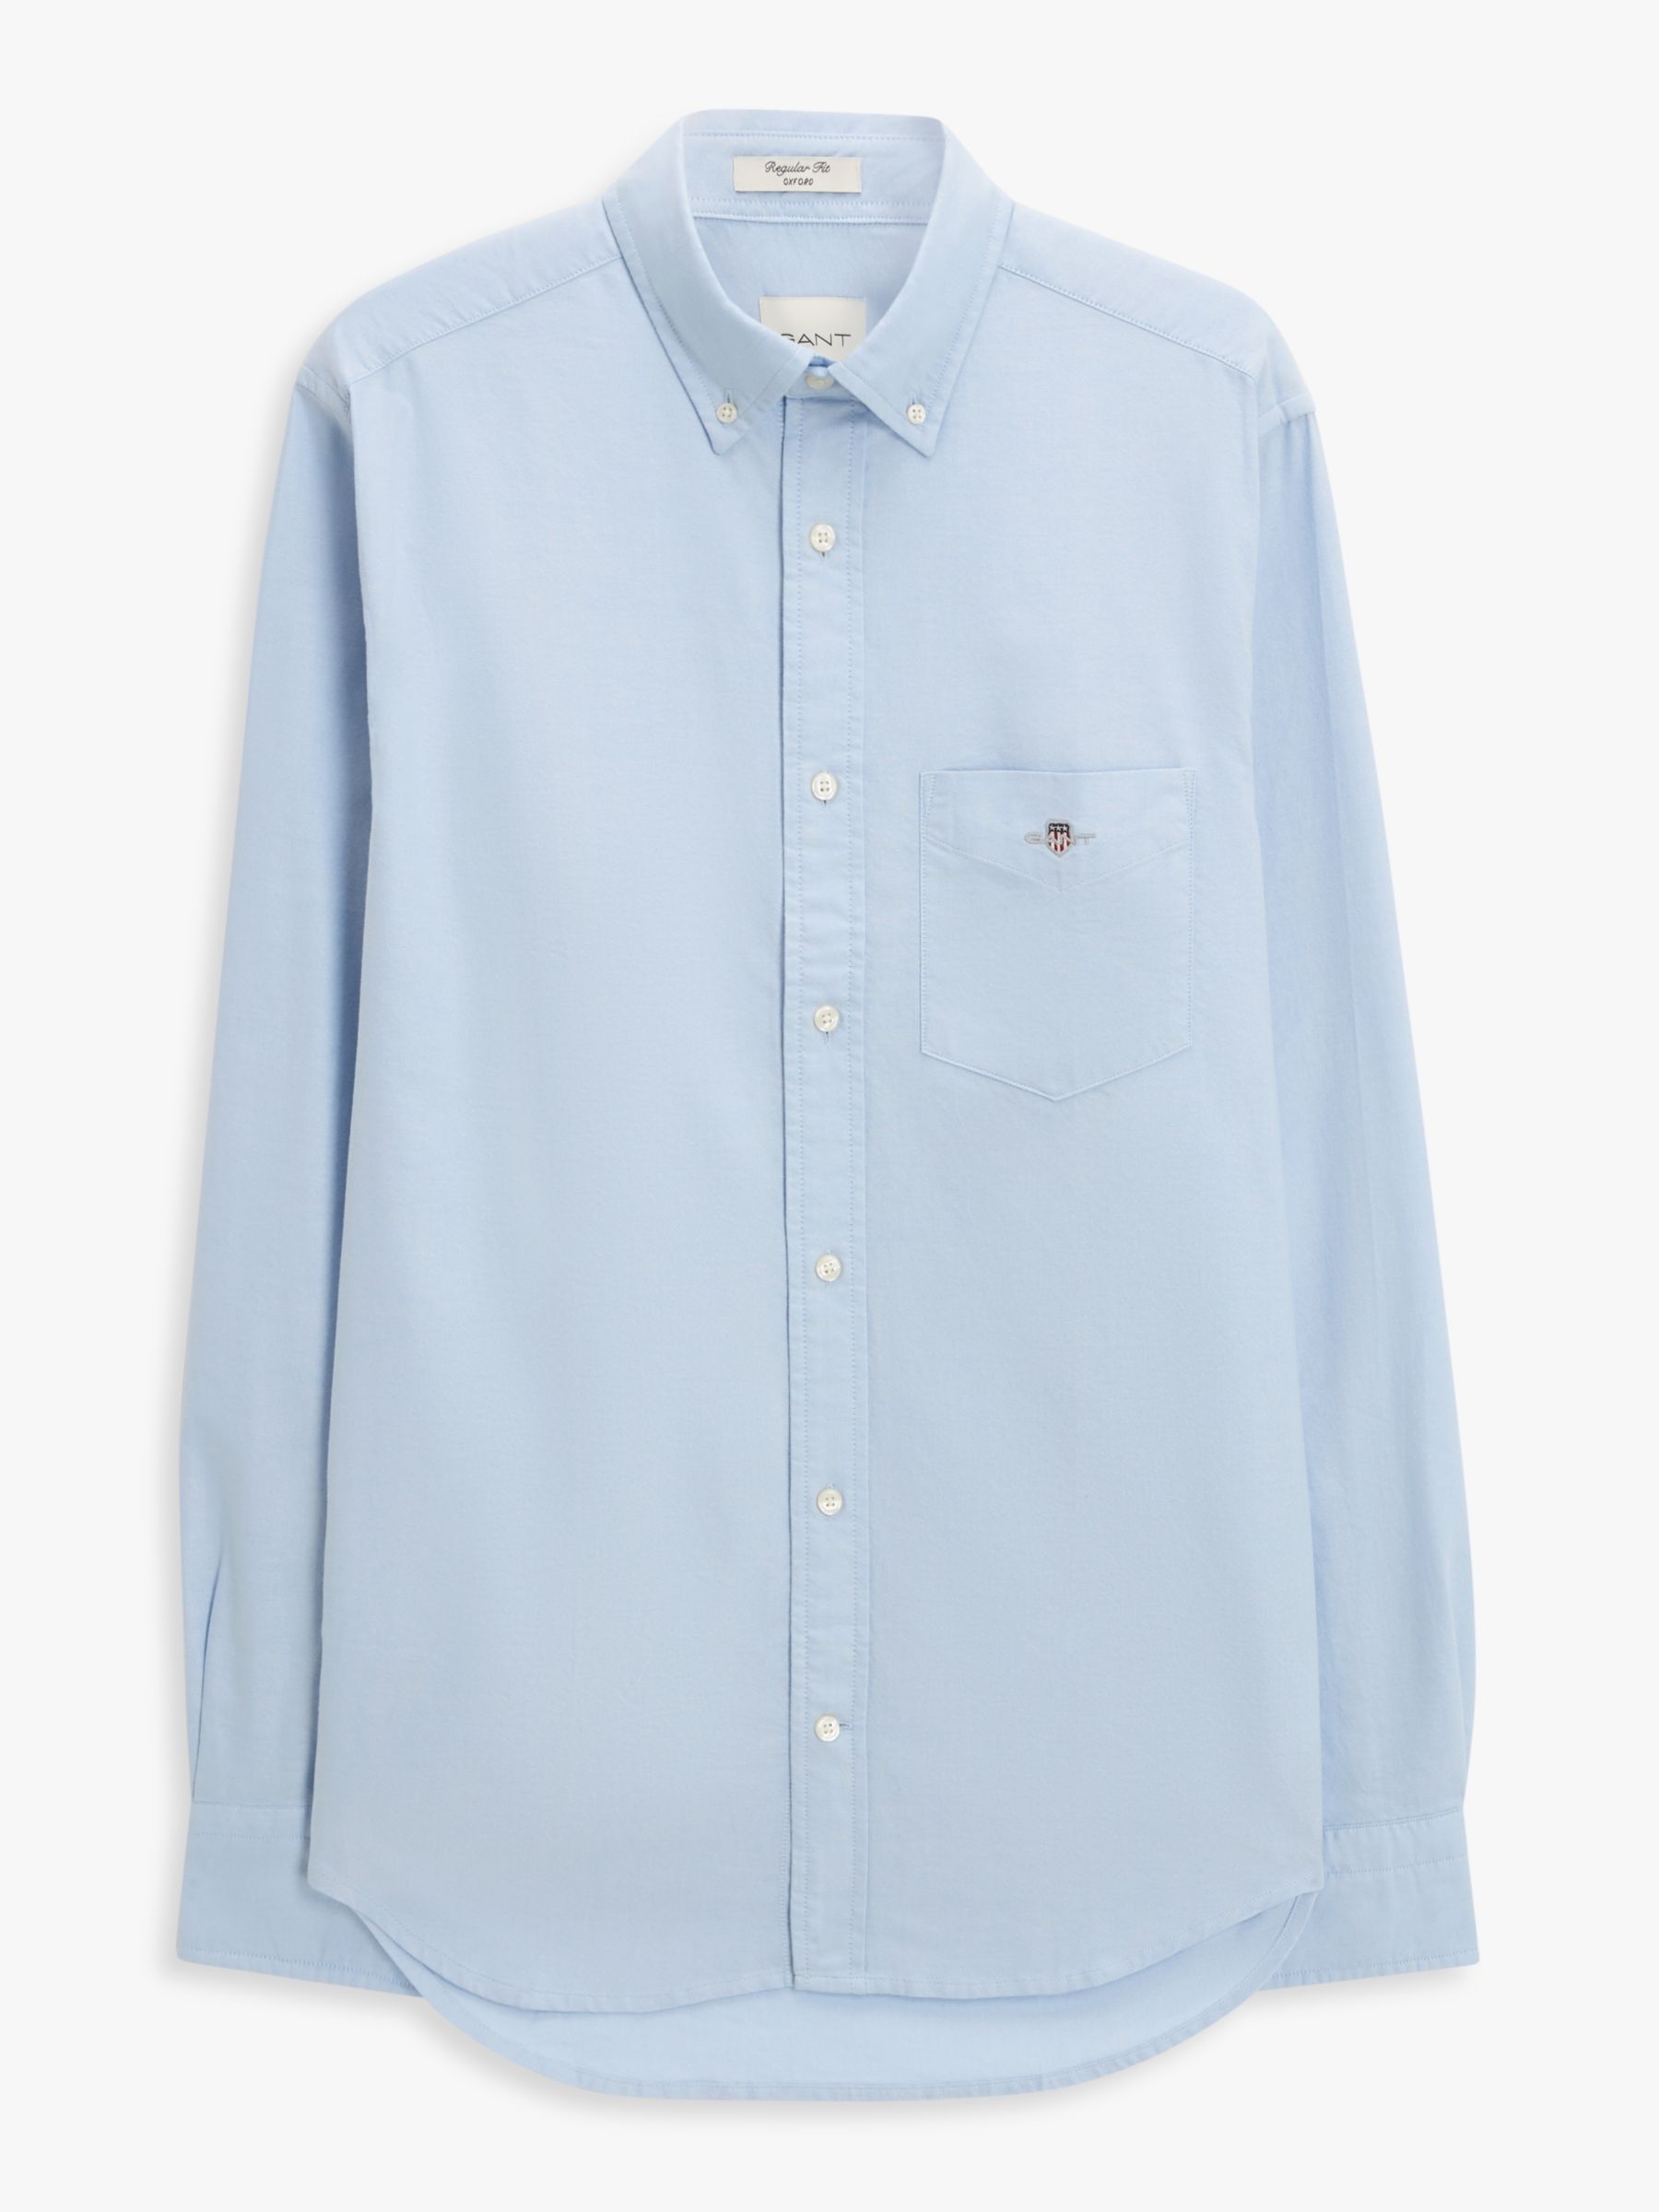 GANT Regular Fit Oxford Shirt, Light Blue, S